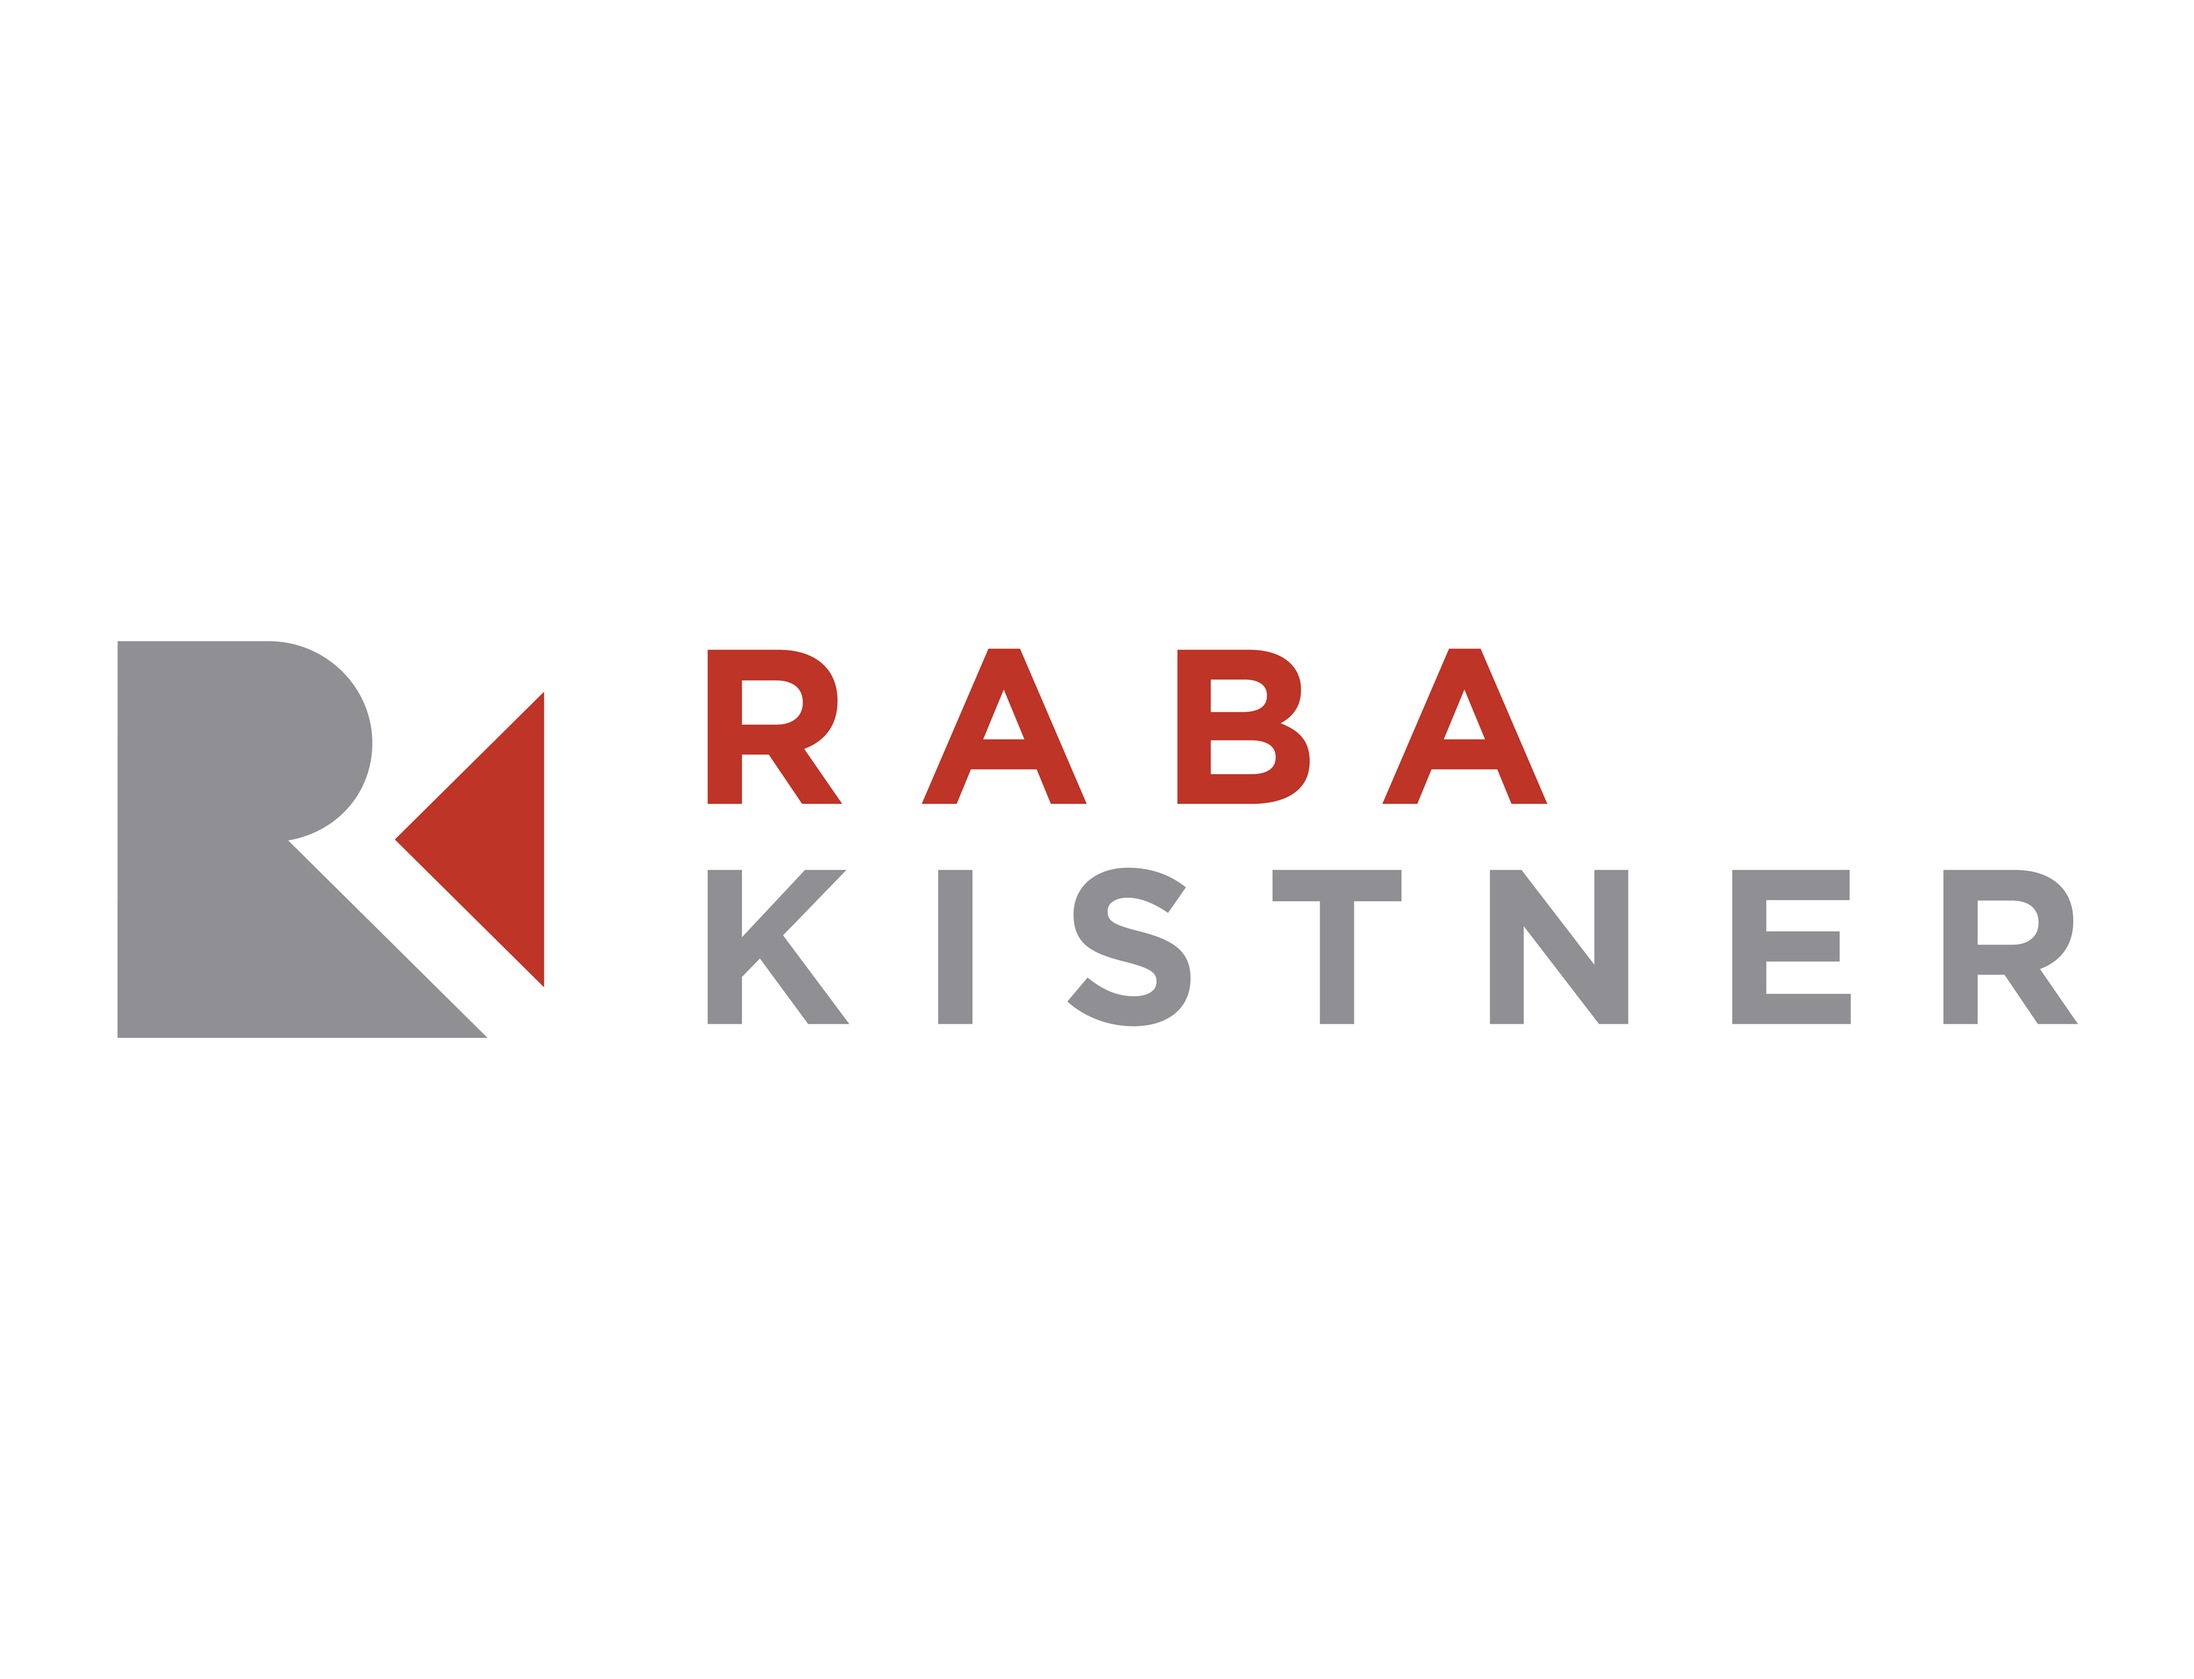 Raba Kistner